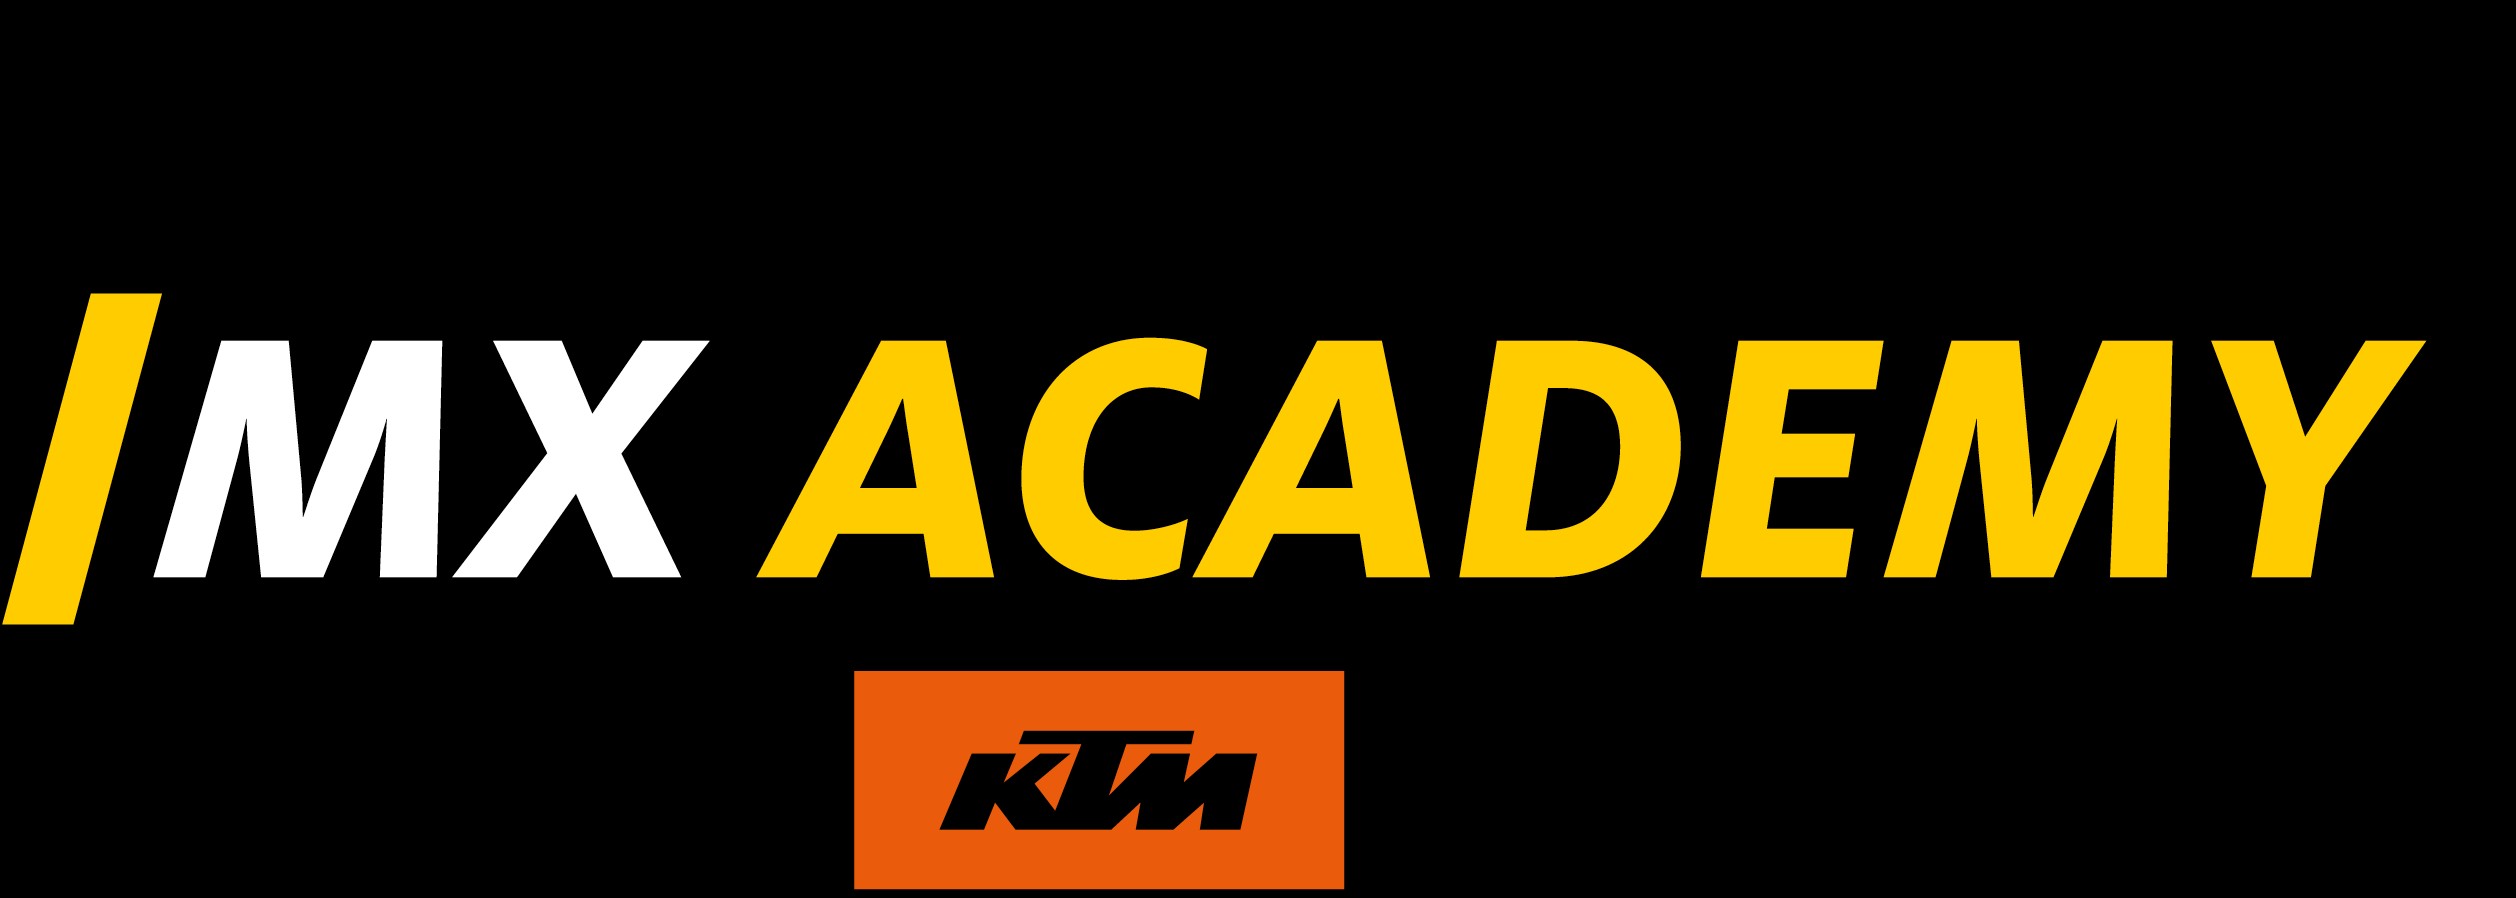 ADAC MX Academy